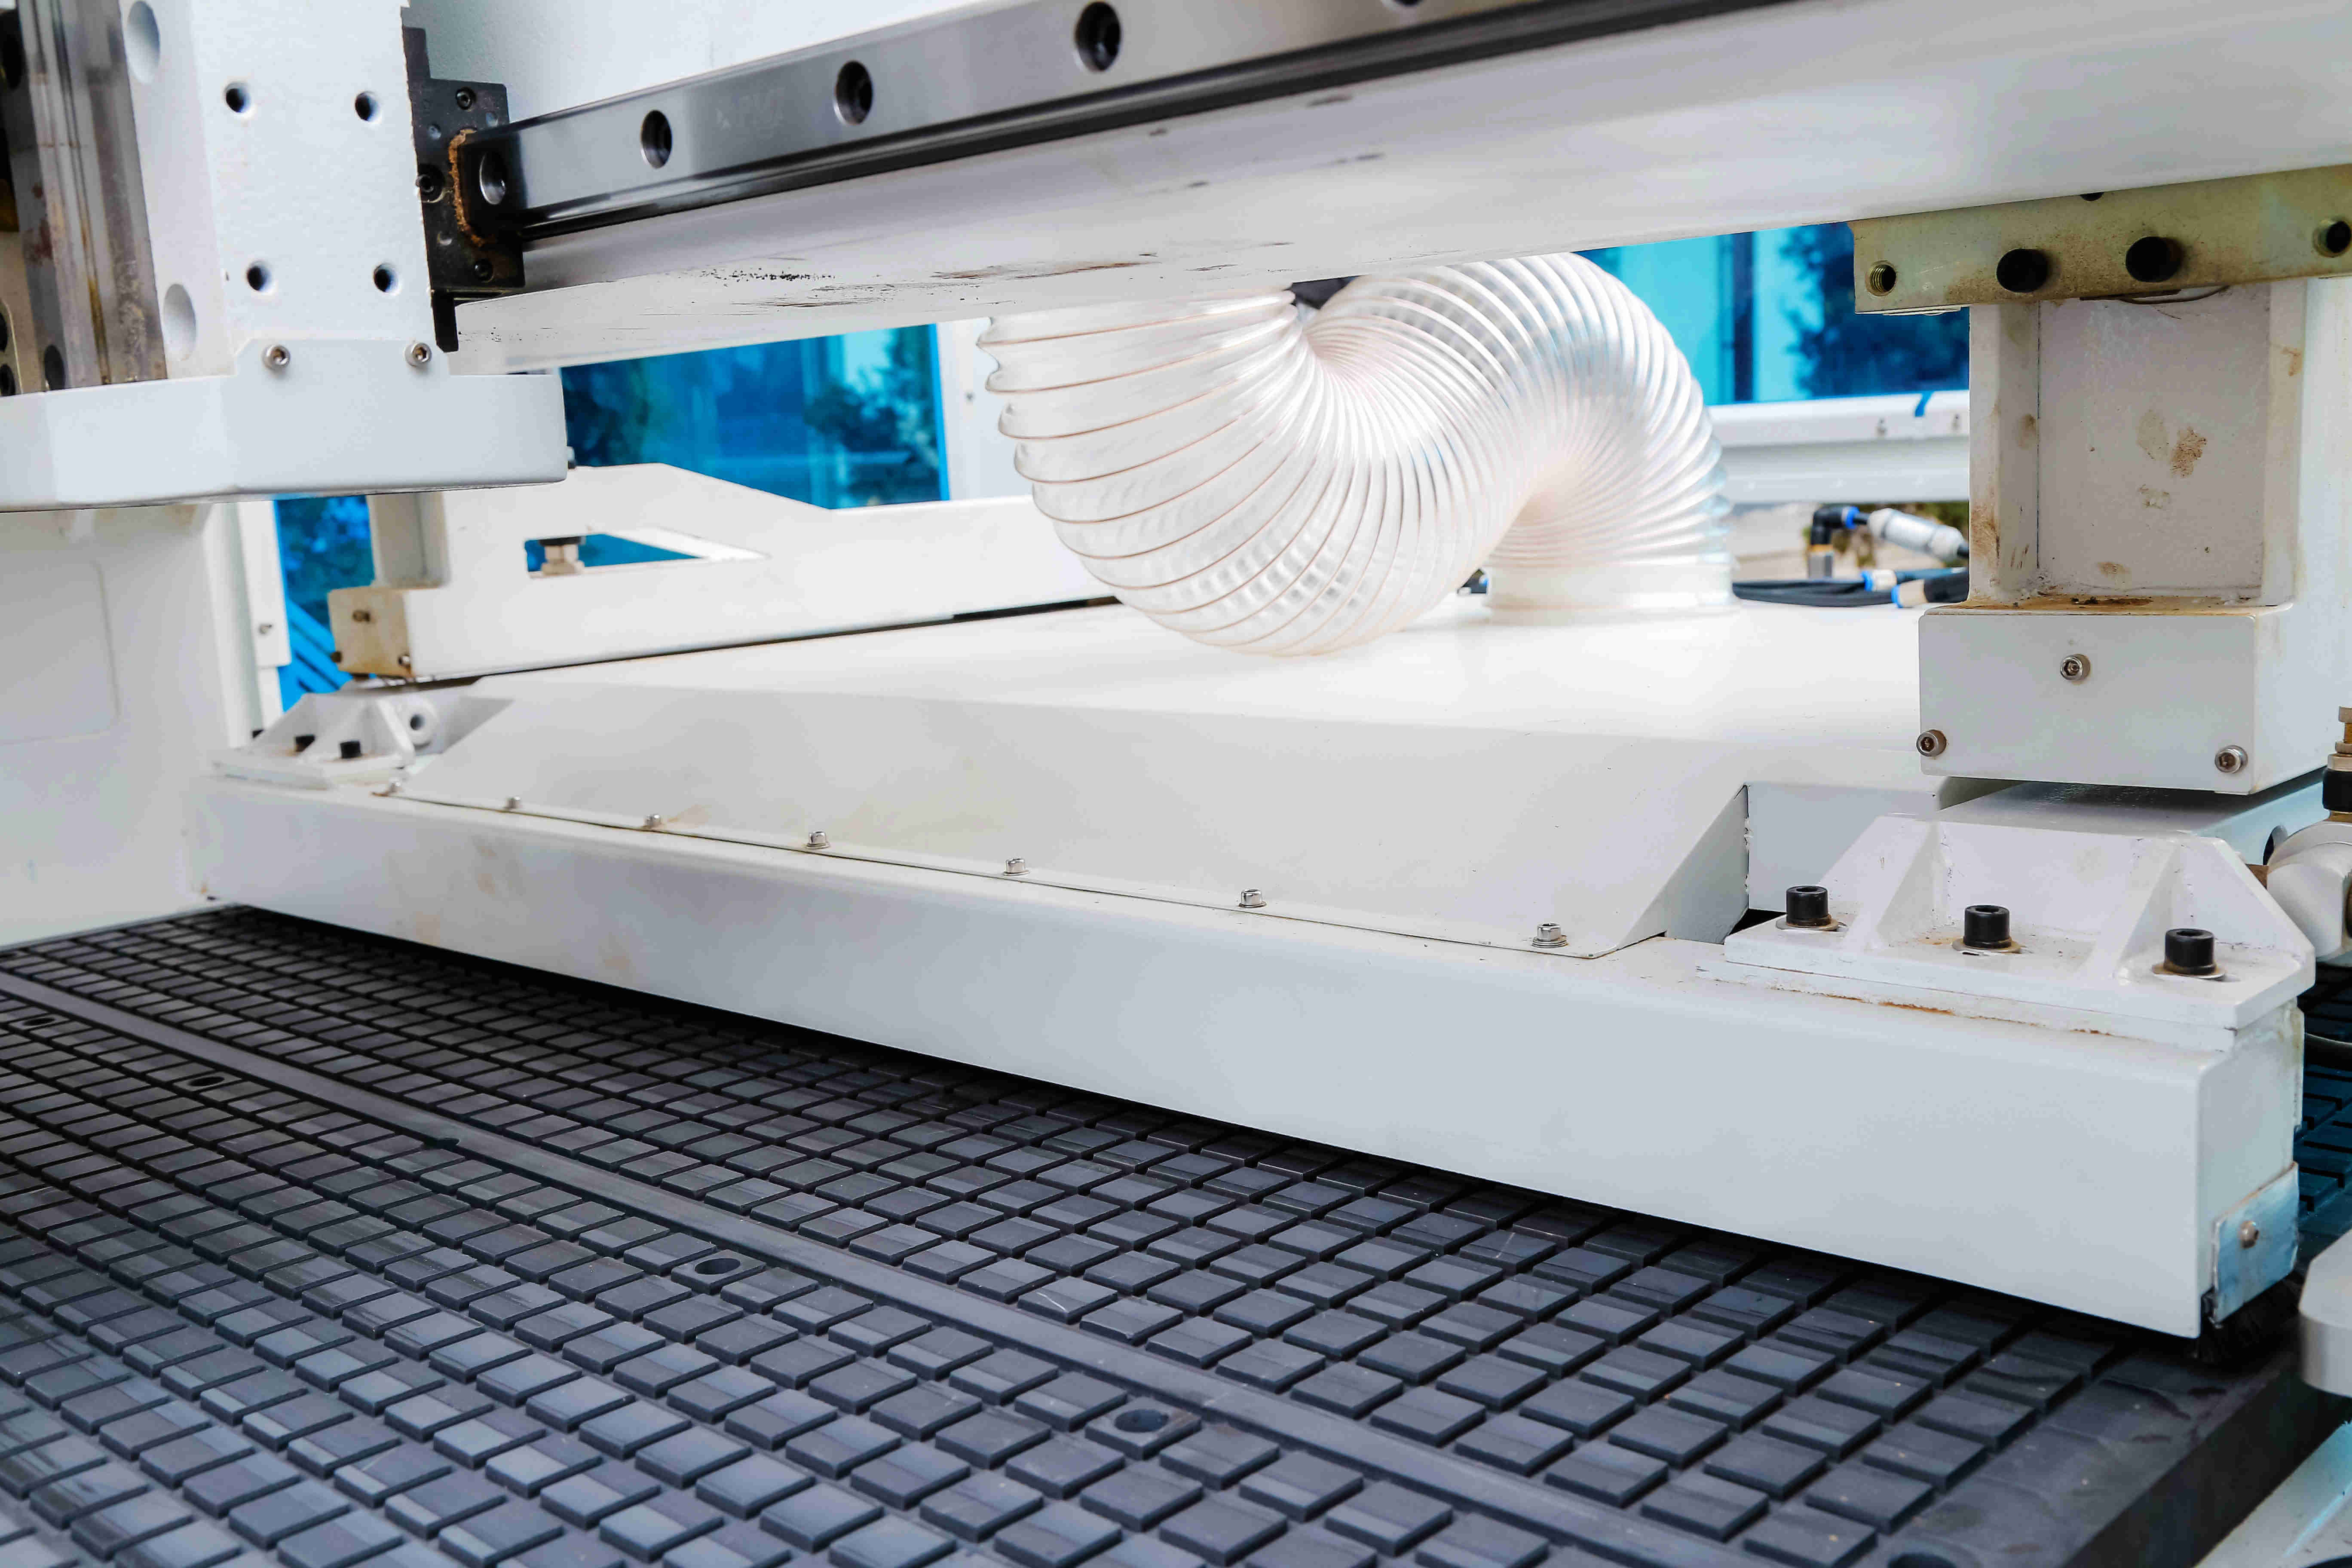 Centro de mecanizado CNC para carpintería resistente S400-K2